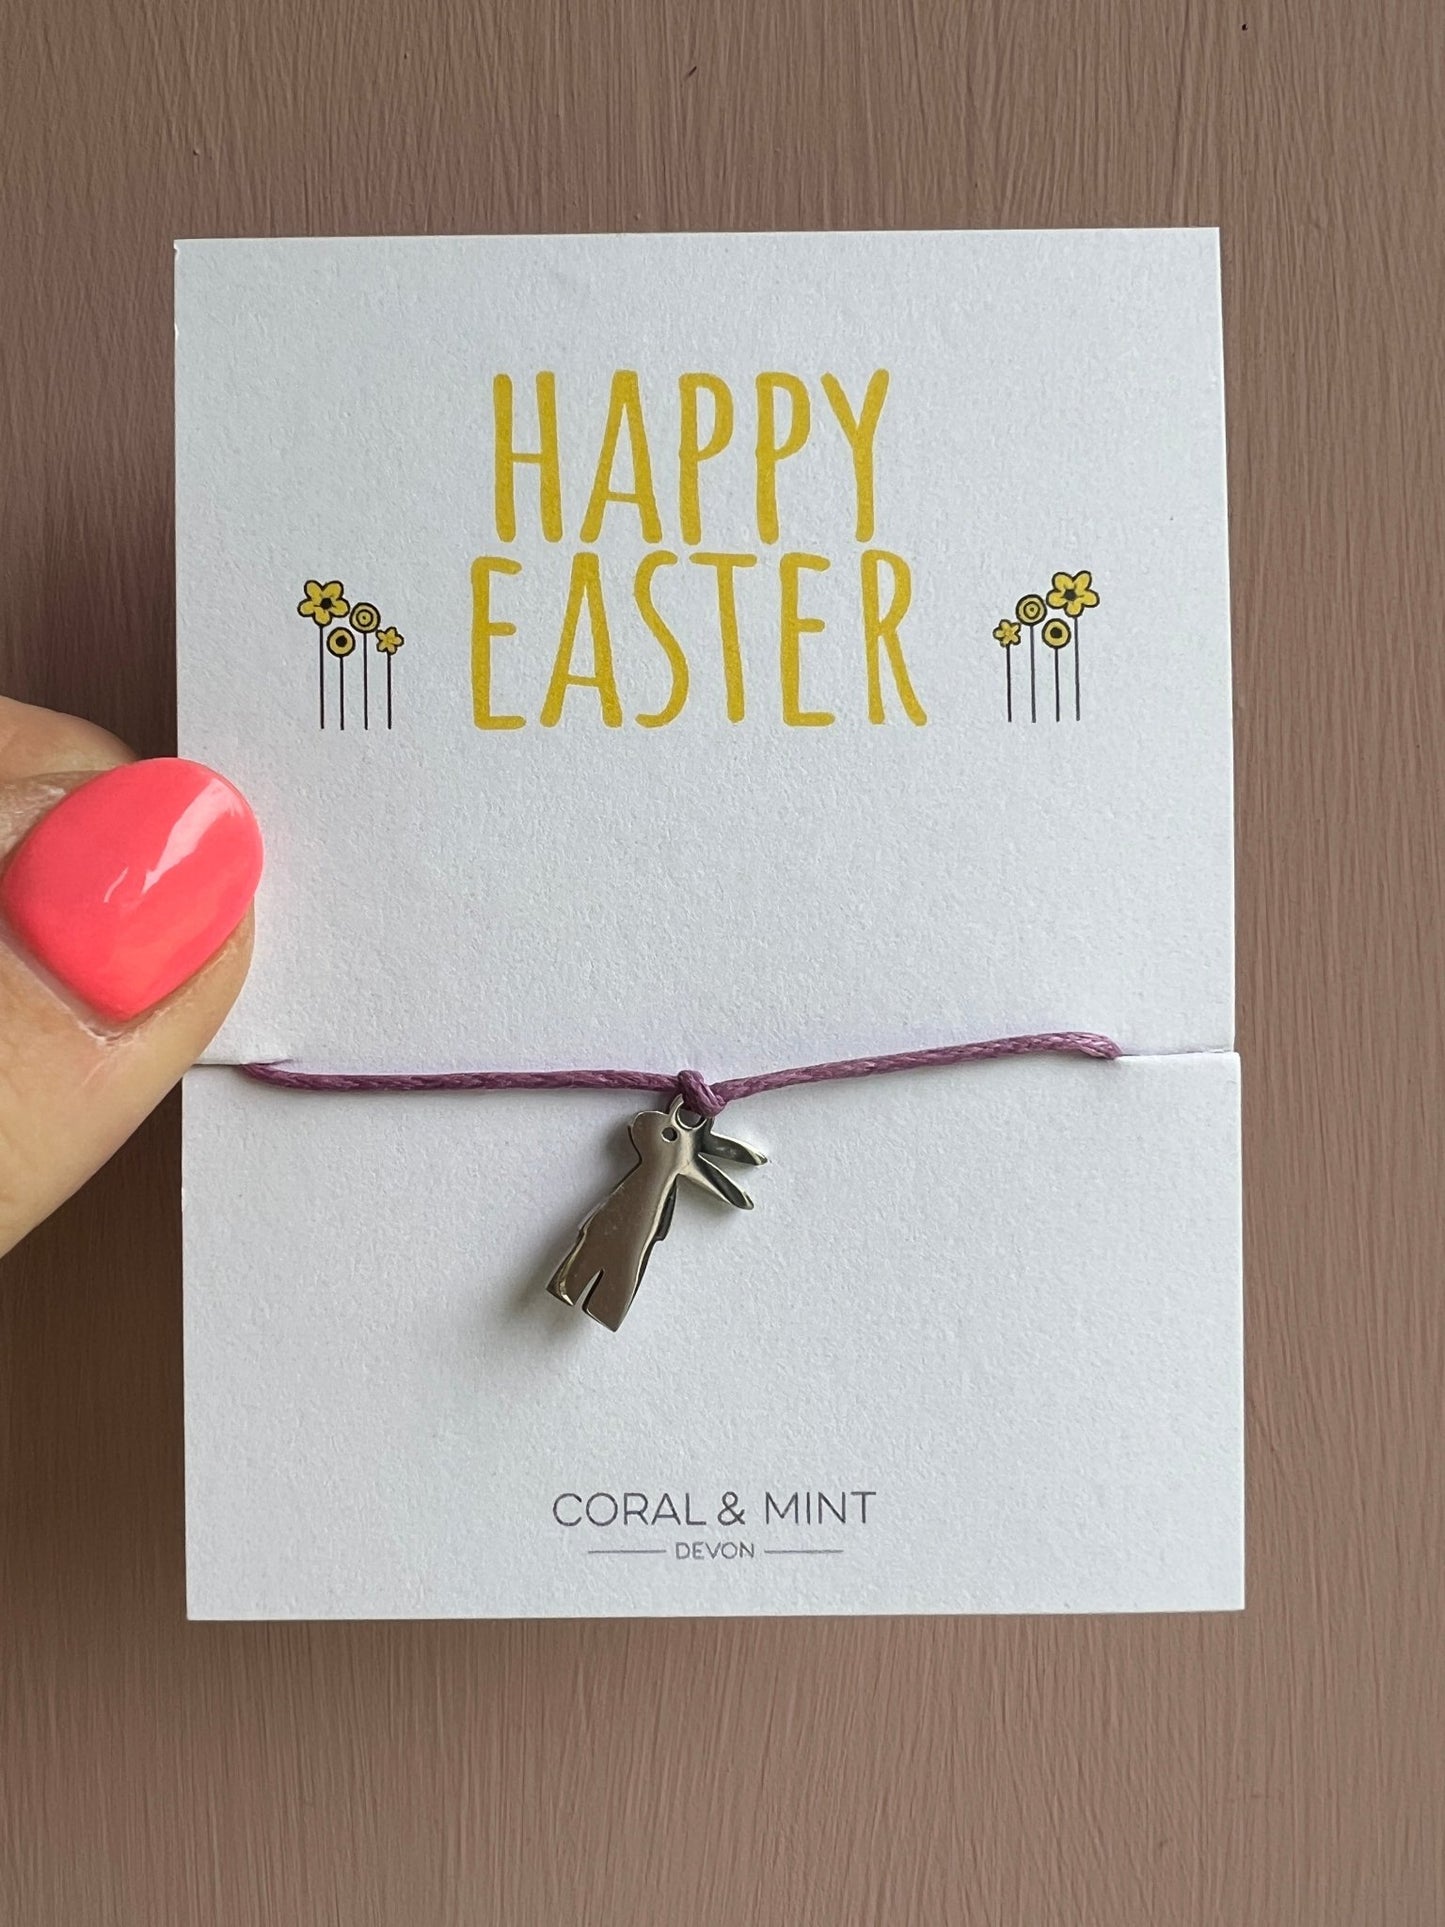 Hoppy Easter String Bracelet Bangle Anklet with Bunny/Rabbit Charm - Readymoney Beach Shop